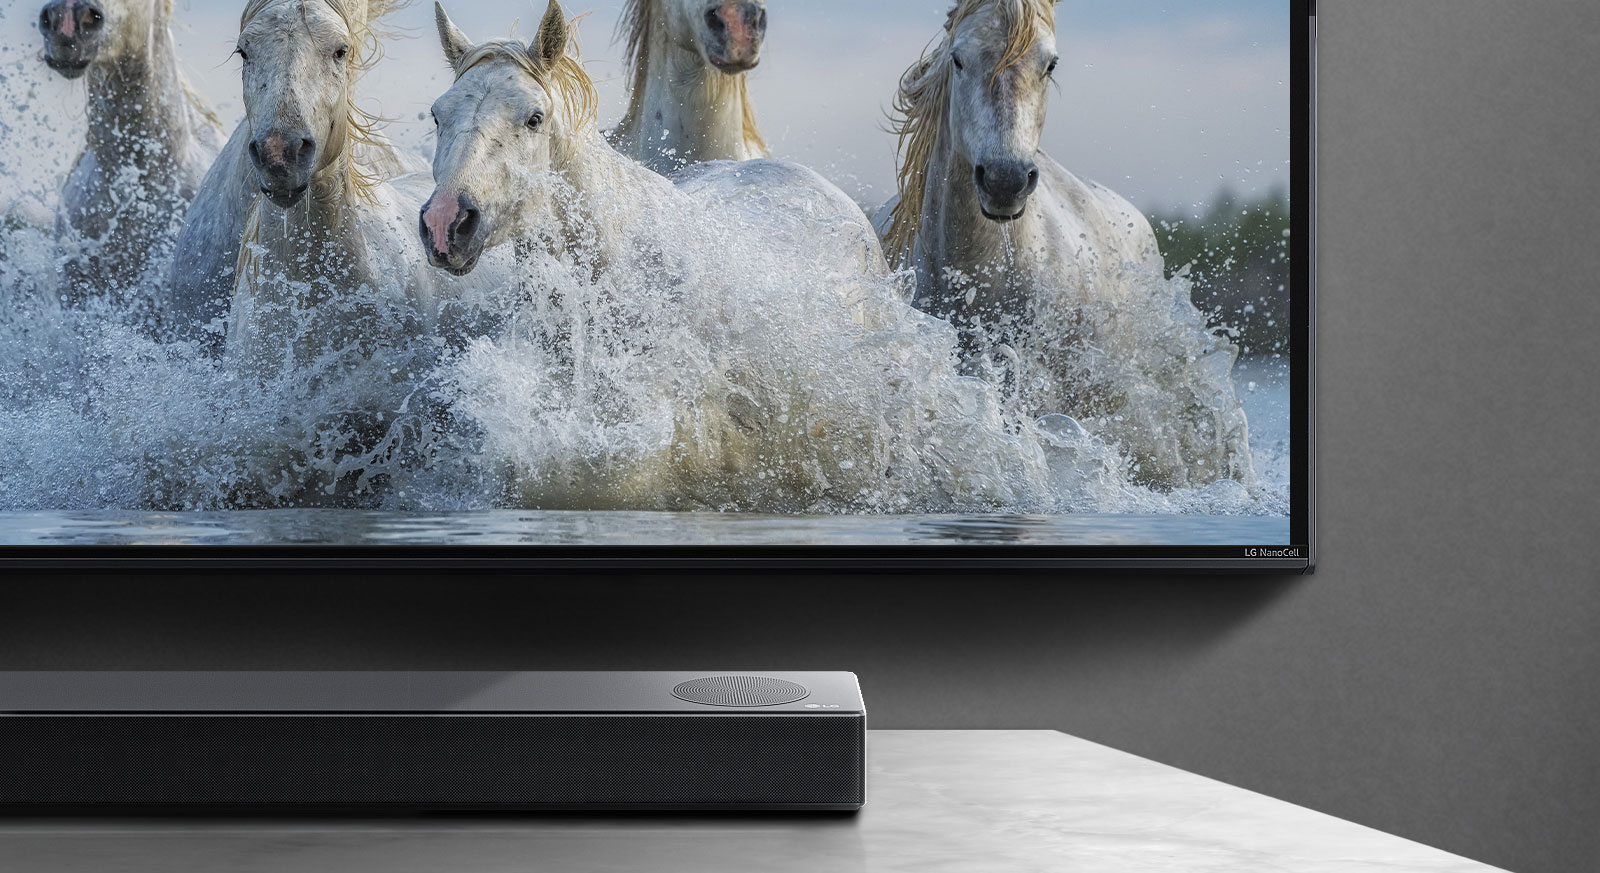 Bottom half screen and half speaker.  The TV shows white horses running over the water.